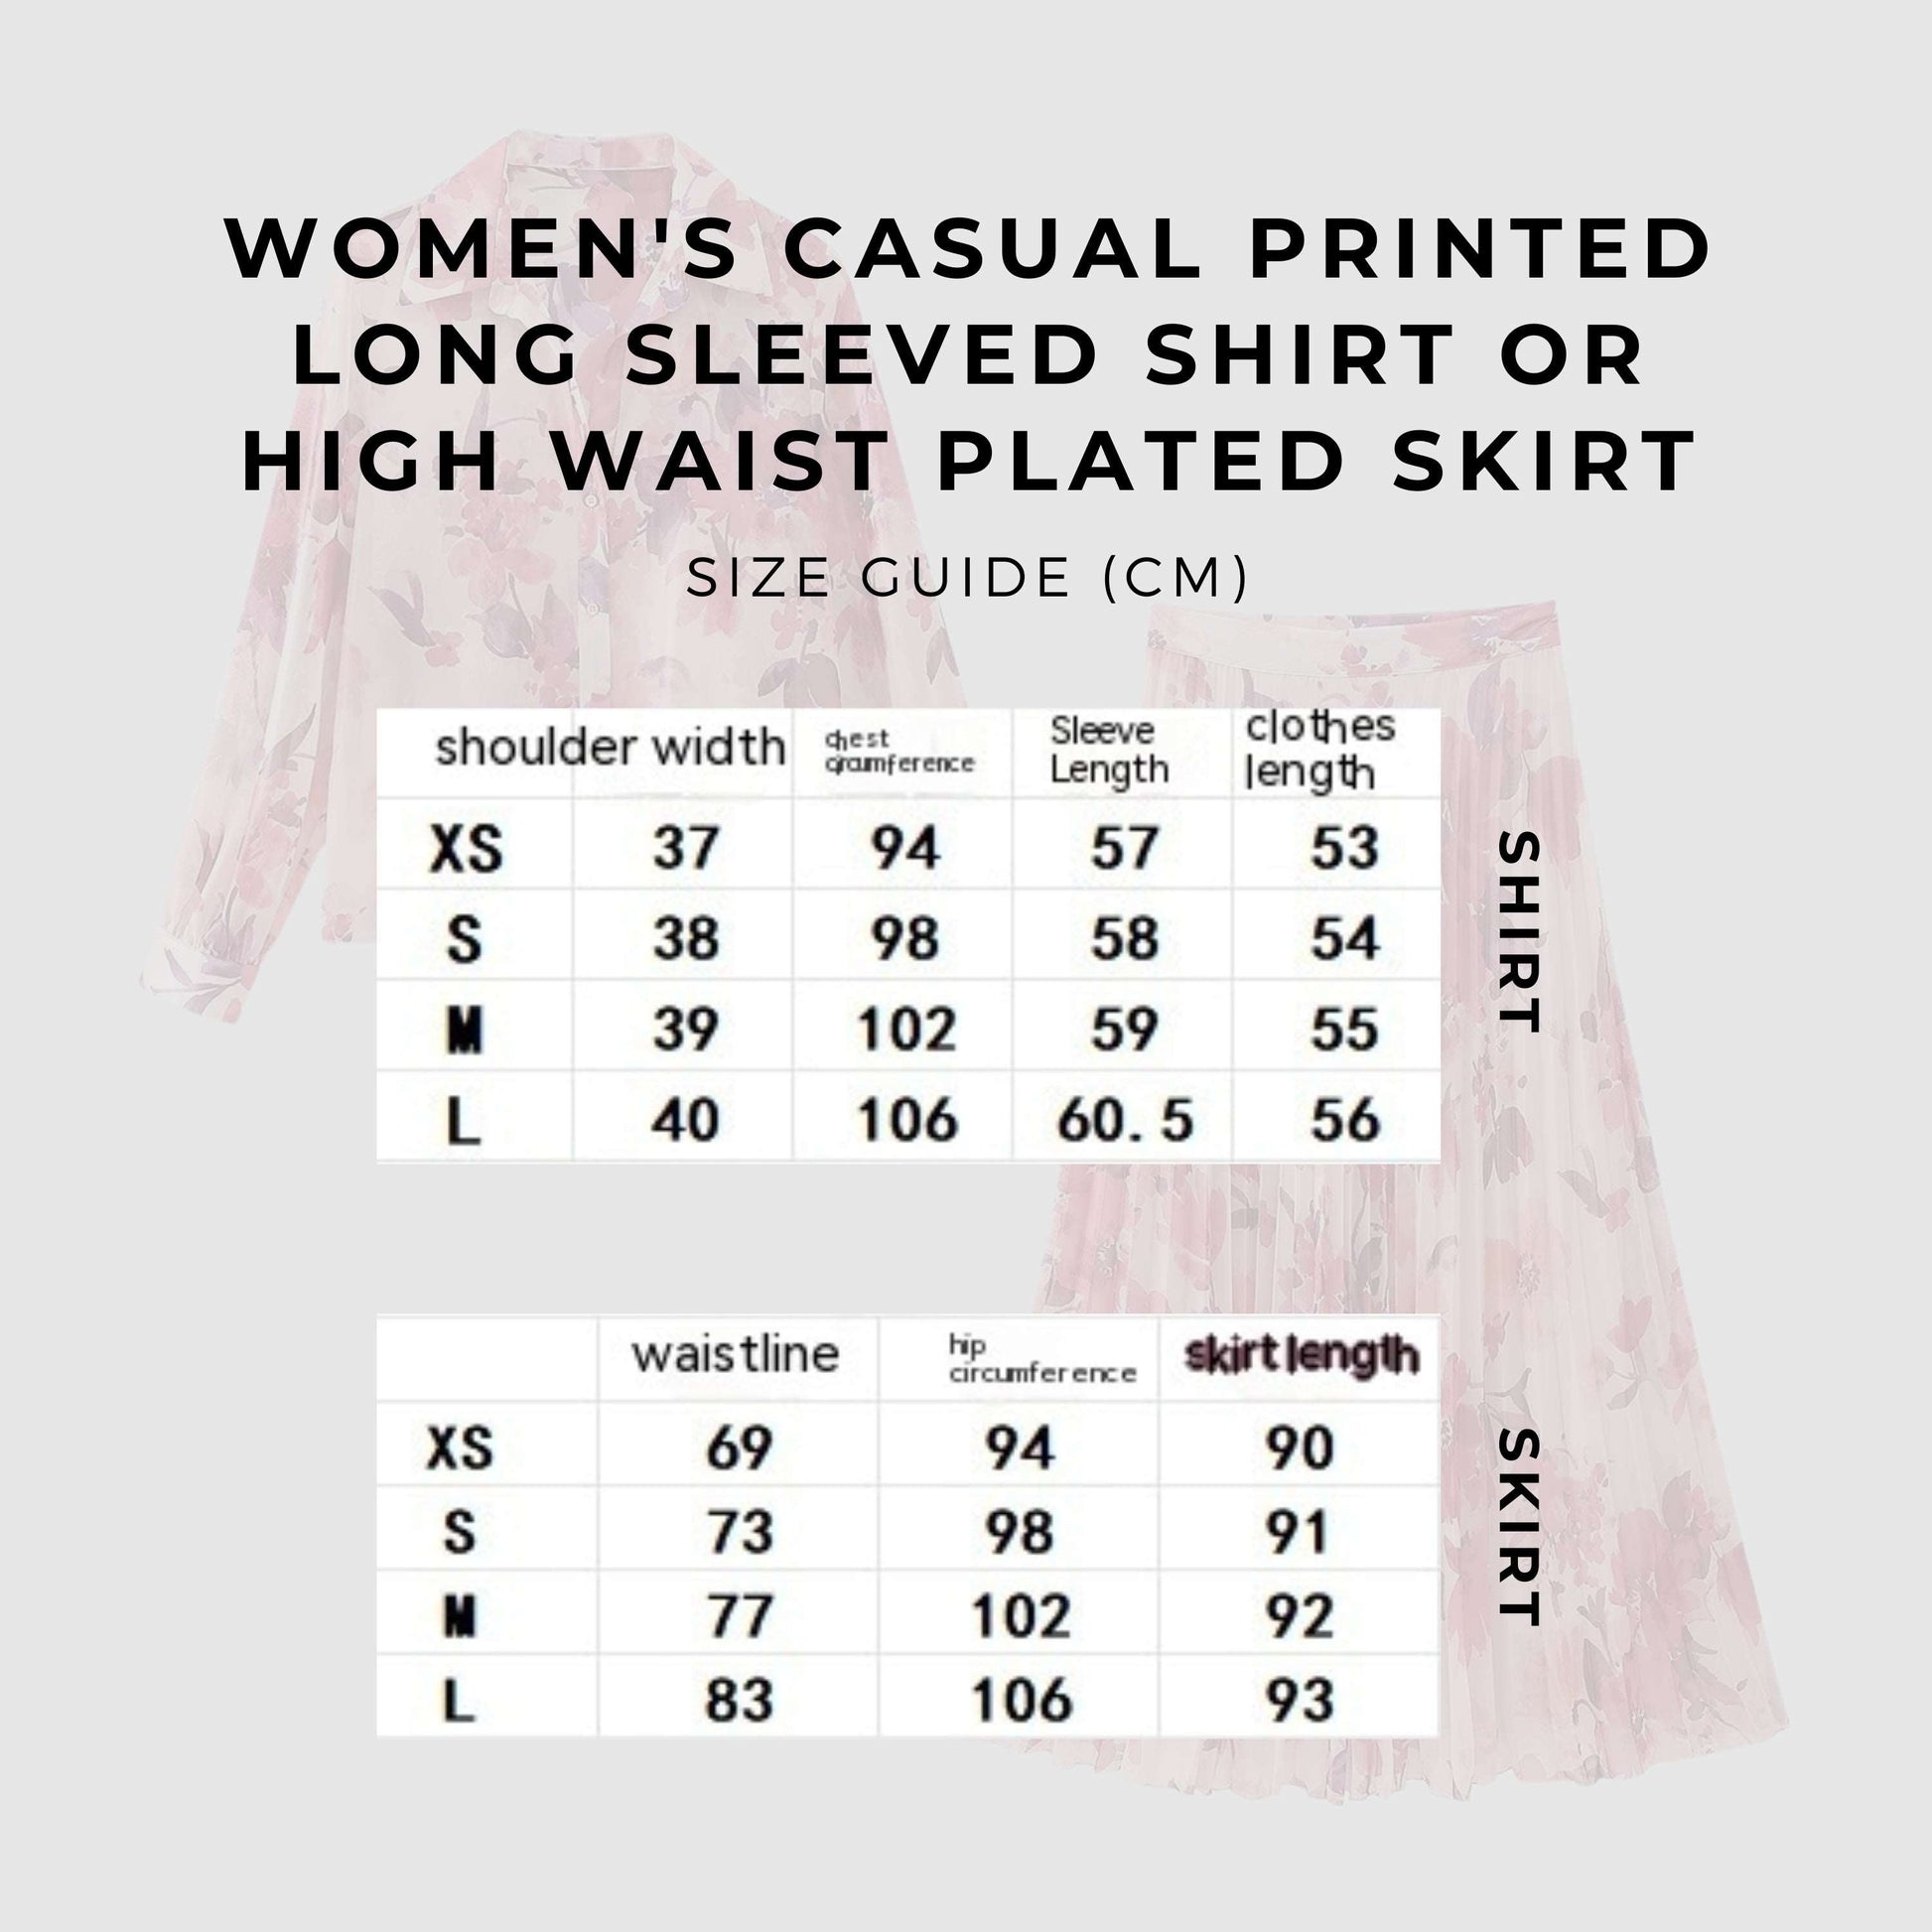 Women's Casual Printed Long Sleeved Shirt or High Waist Plated Skirt (NOT A SET)